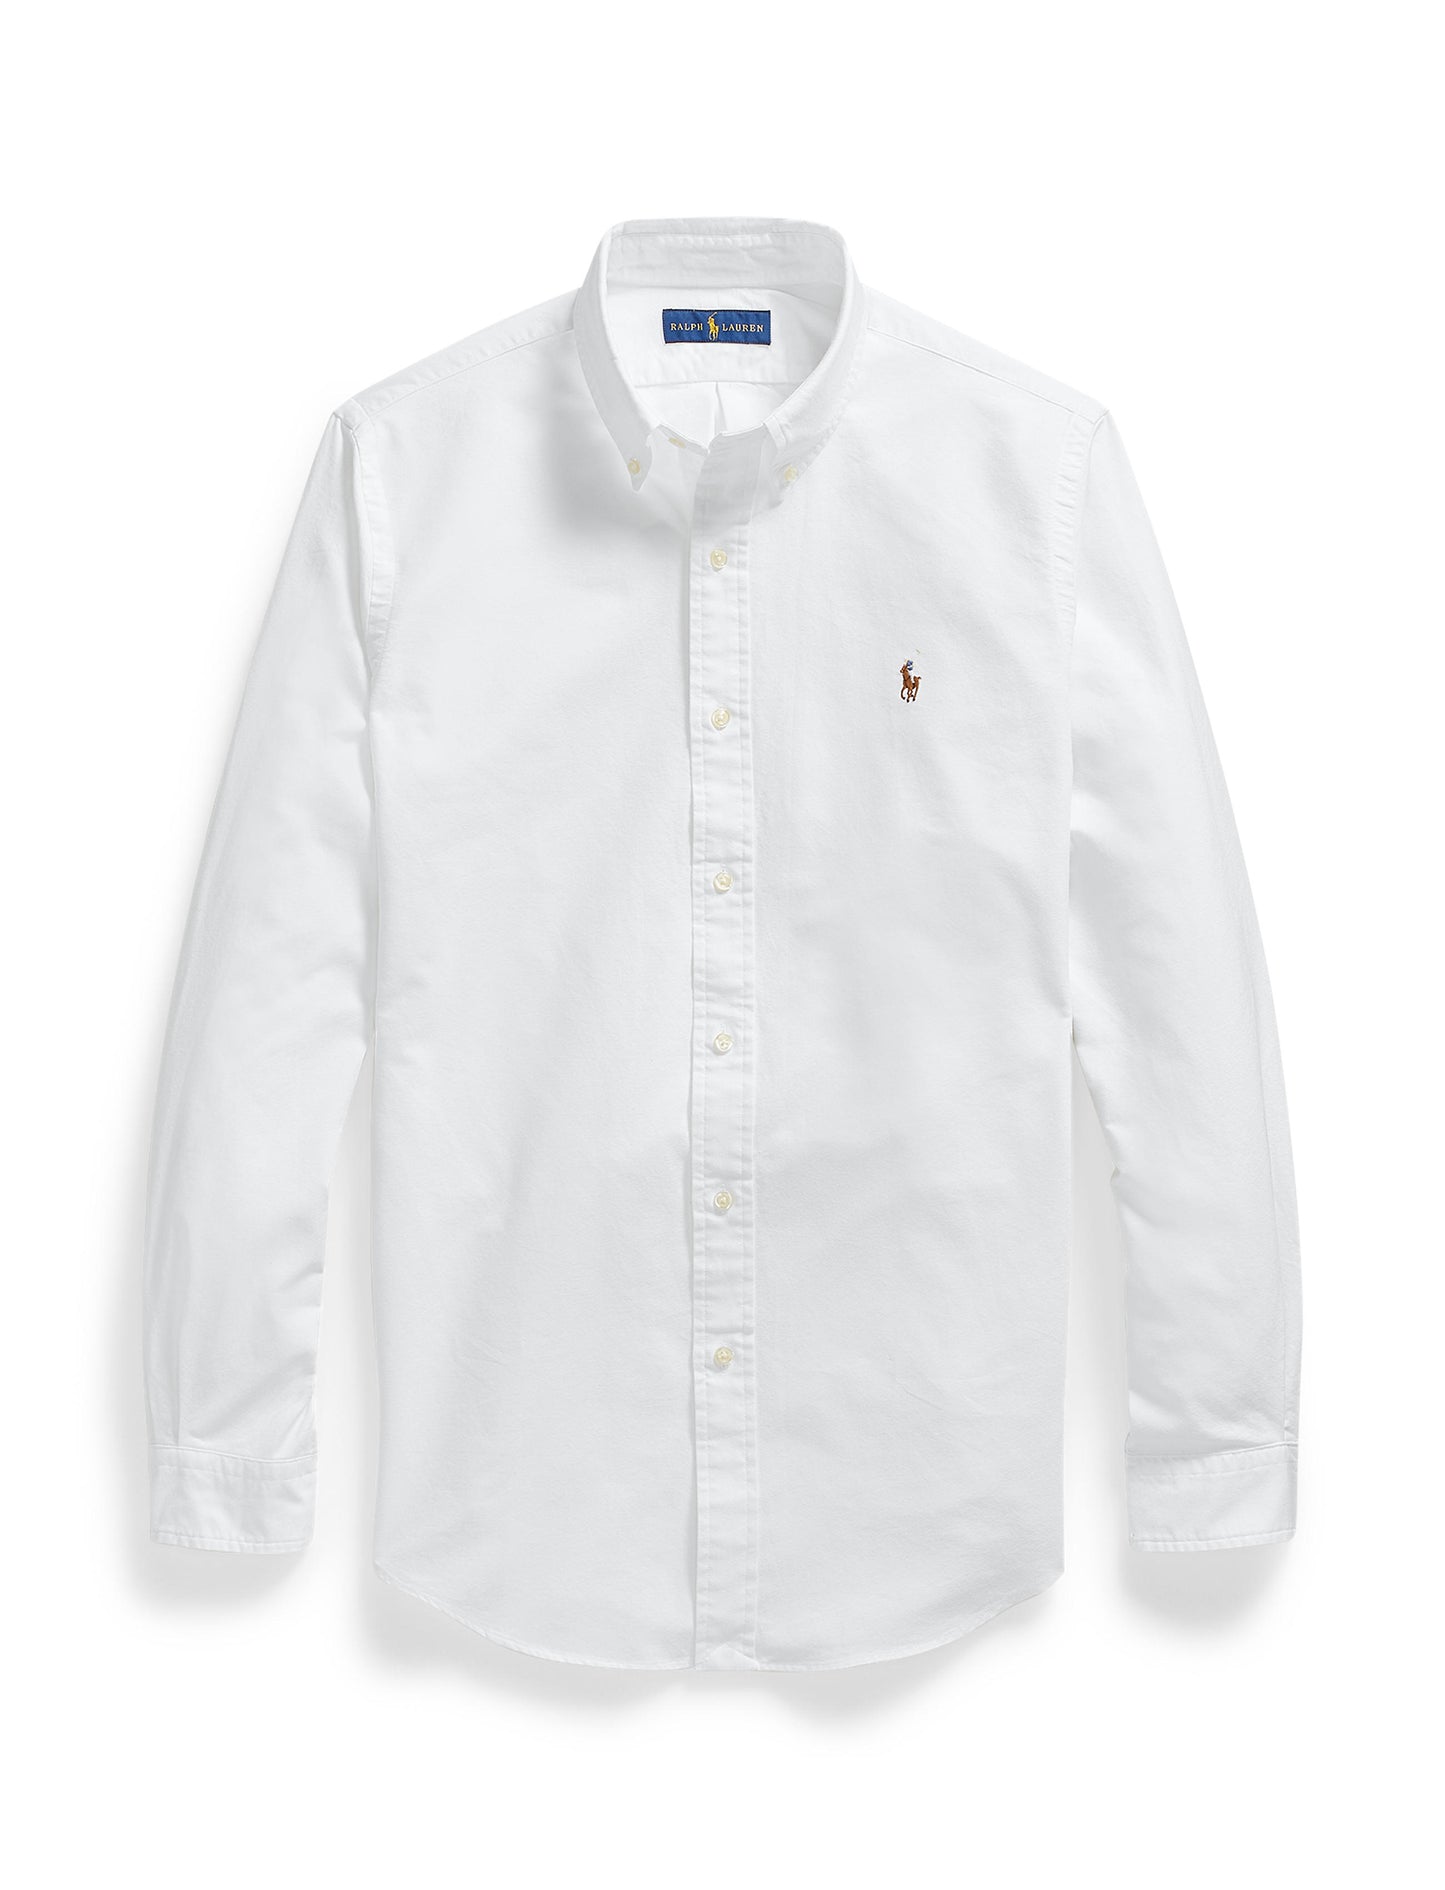 Polo Ralph Lauren Custom Fit Oxford Shirt White